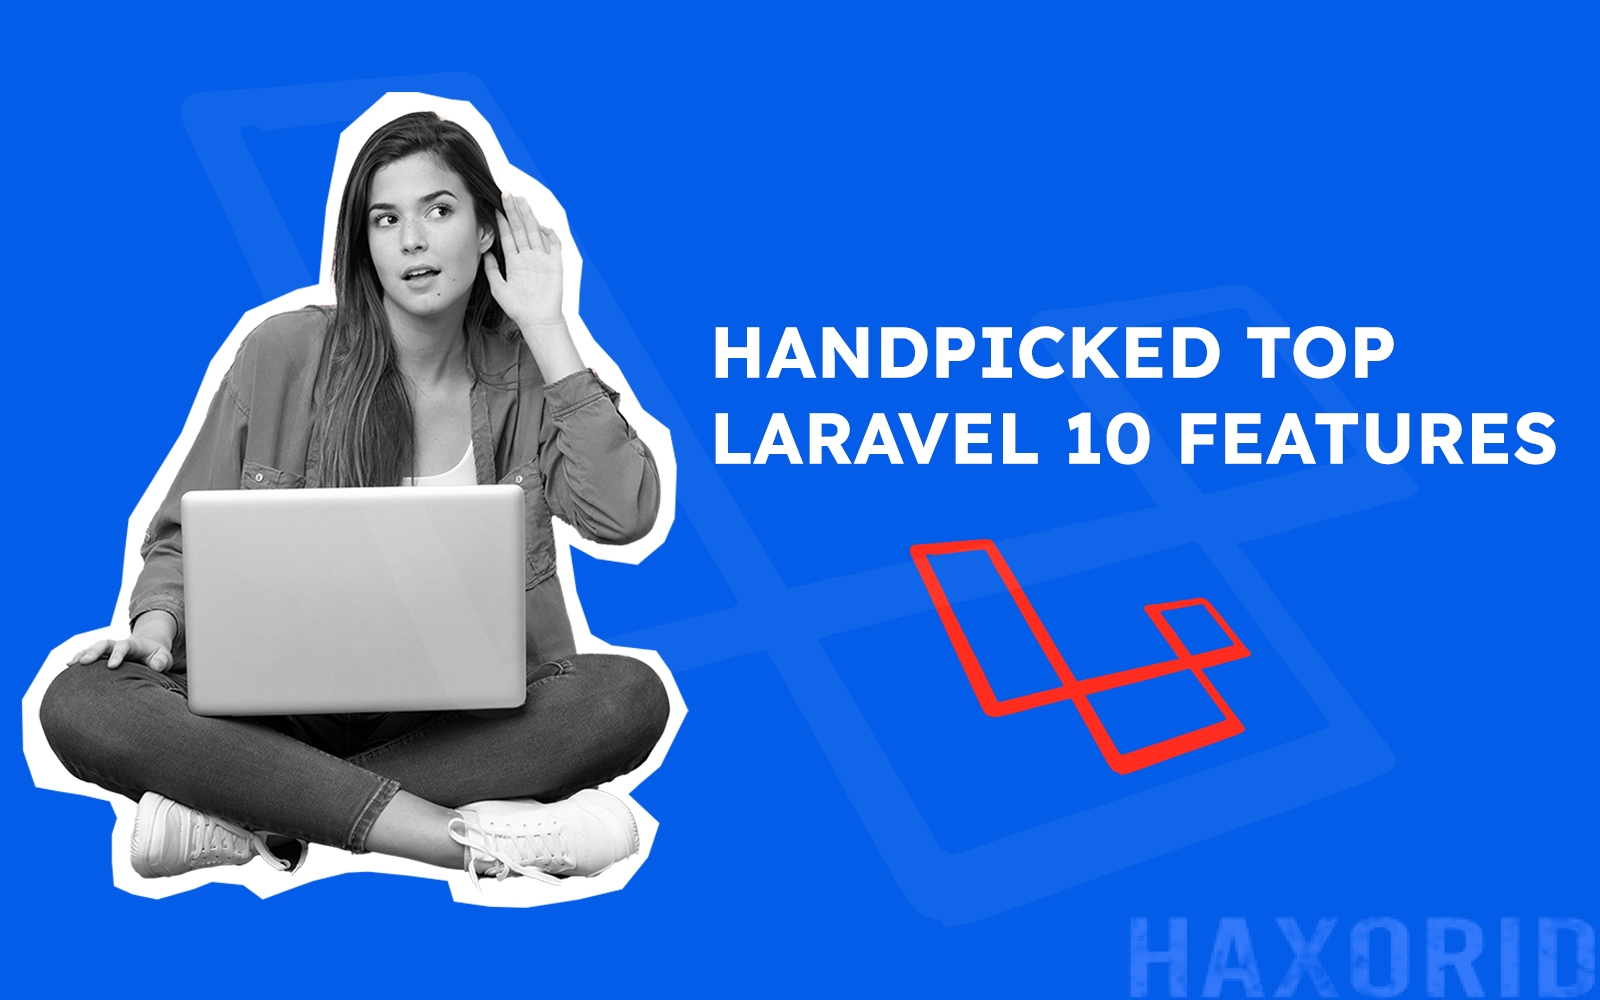 Handpicked Top Laravel 10 Features.jpg